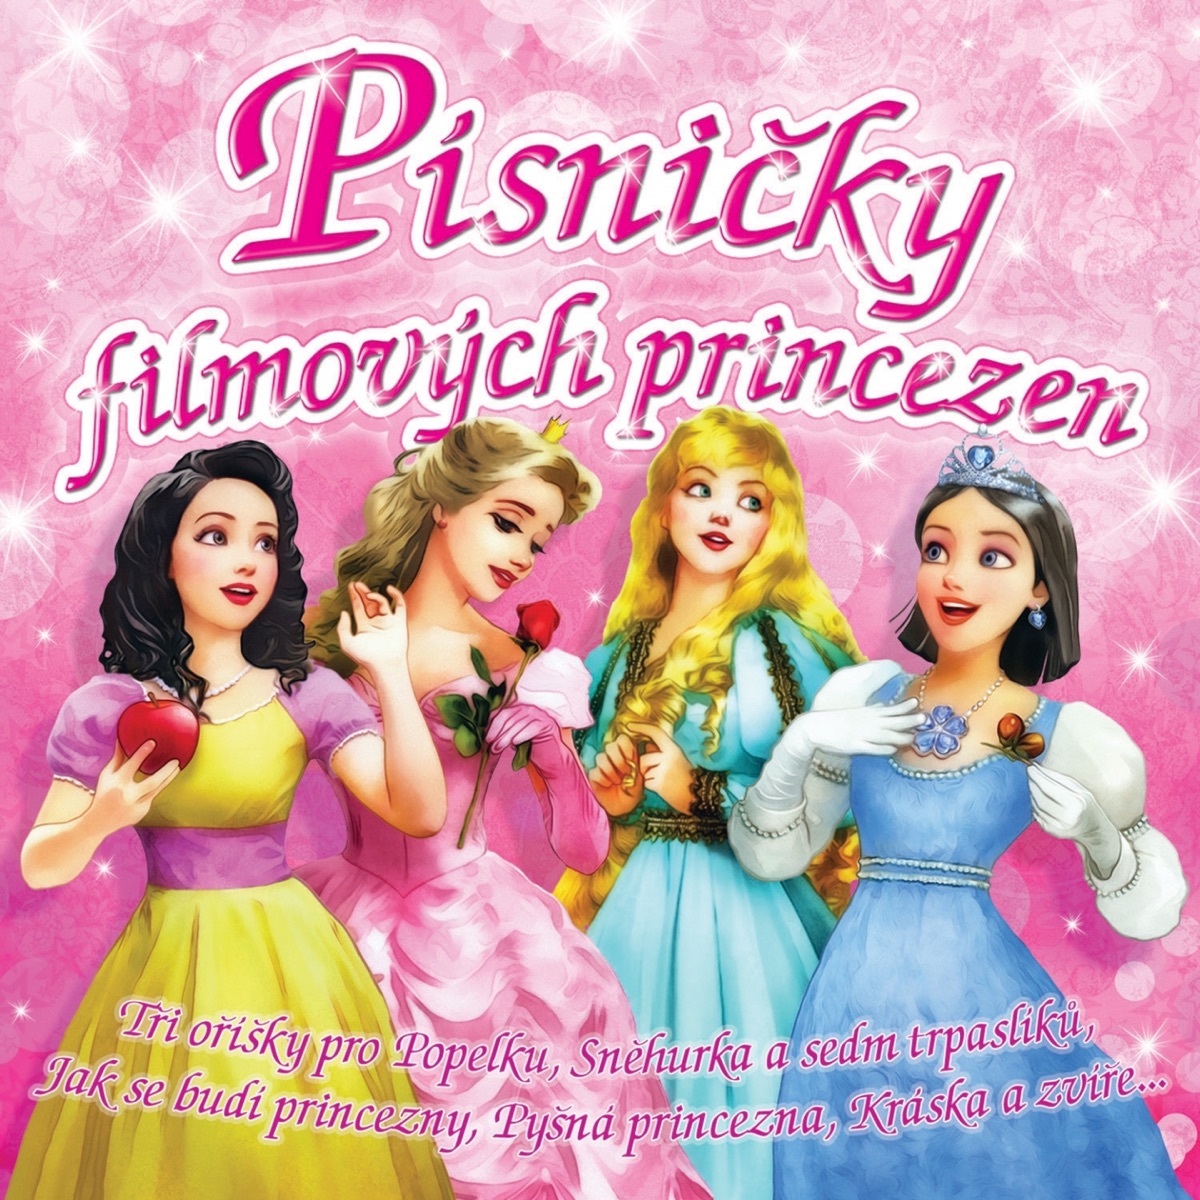 Písničky Filmových Princezen - Album by Various Artists - Apple Music